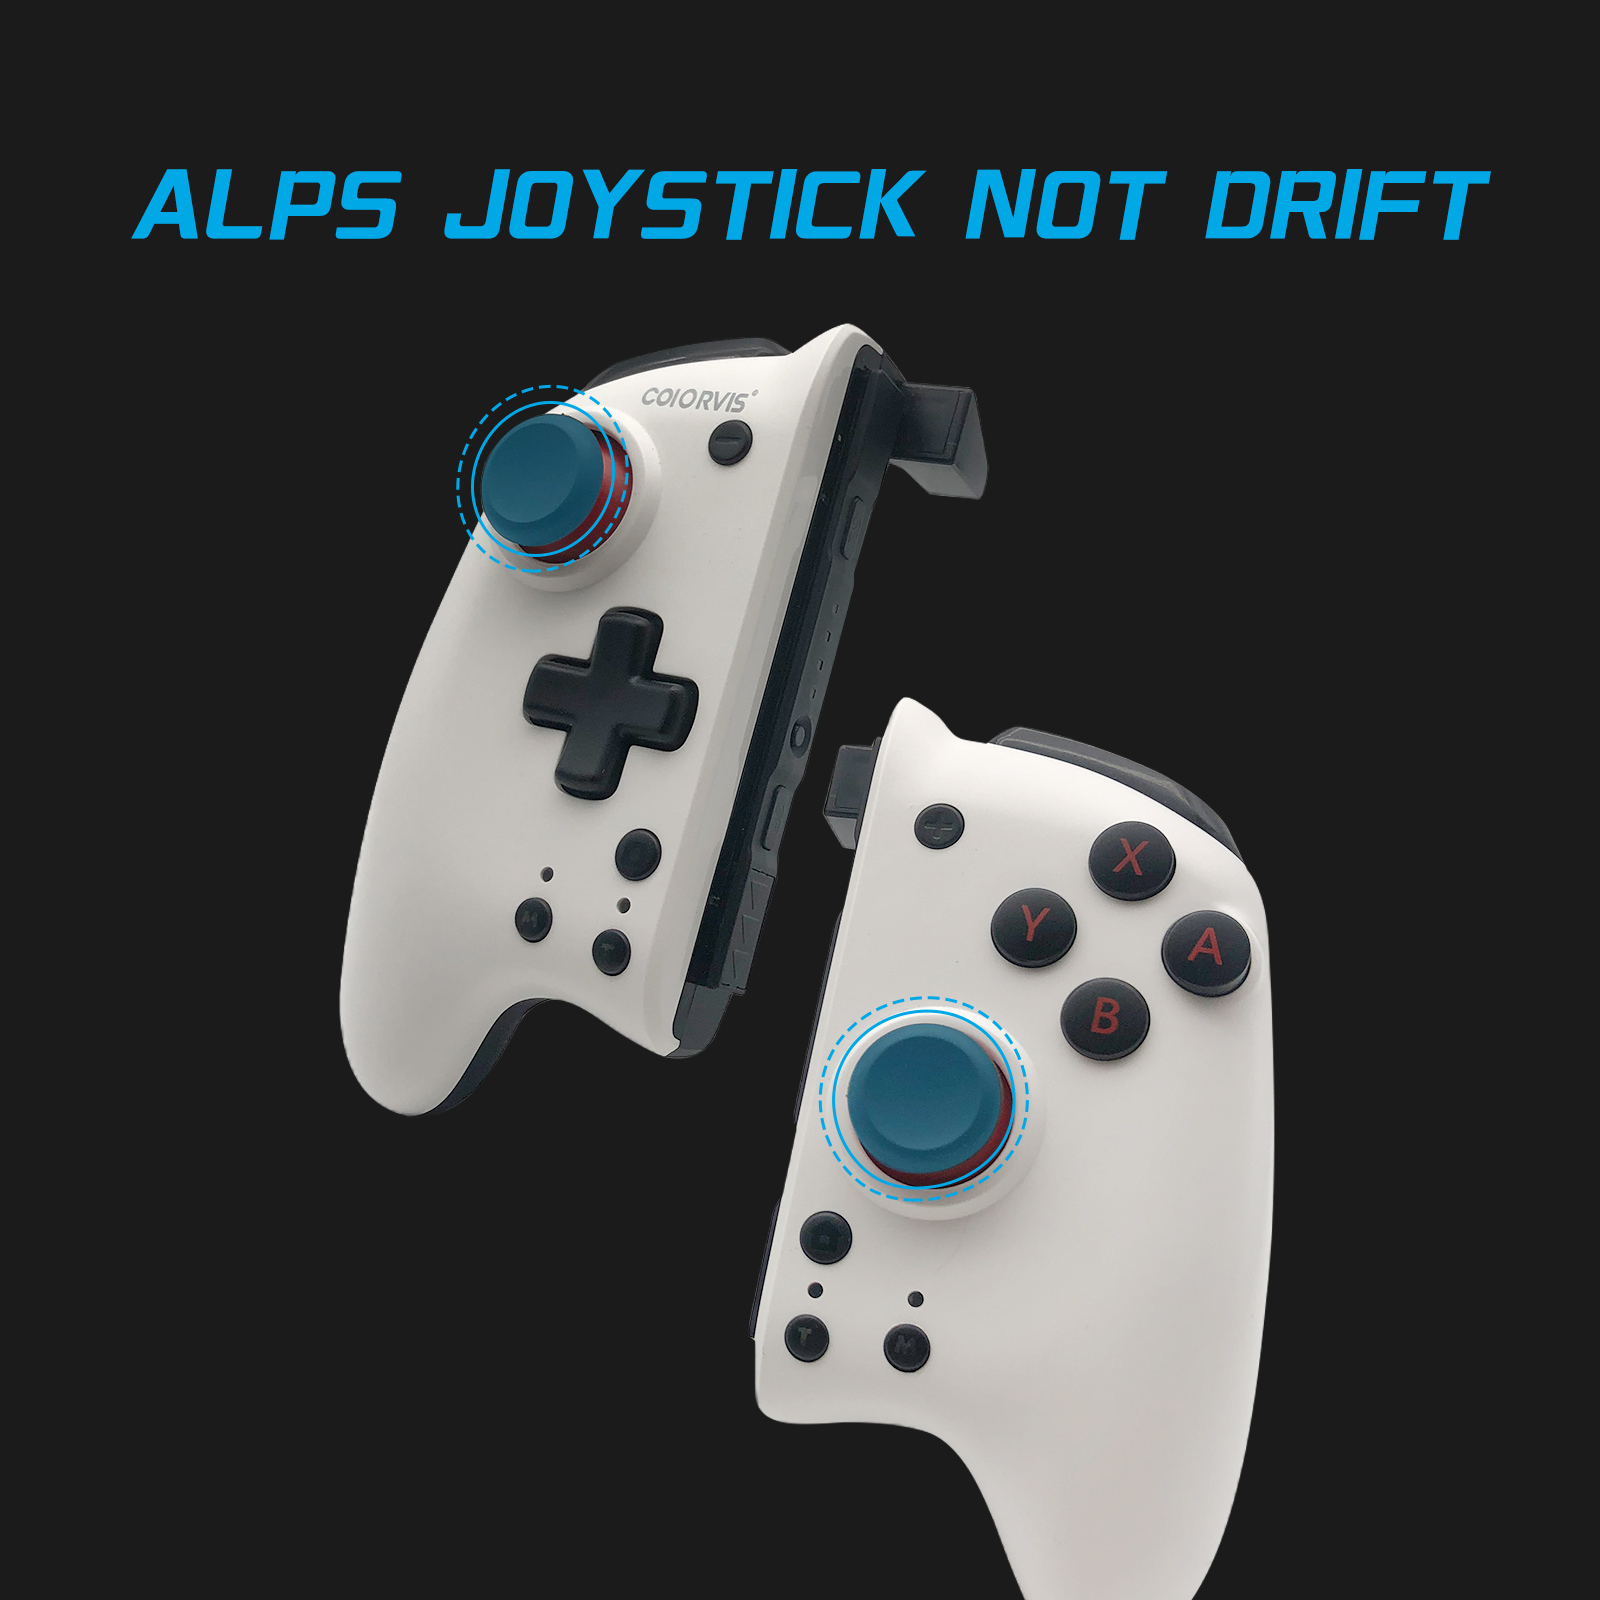 Original ALPS joystickers from Japan!